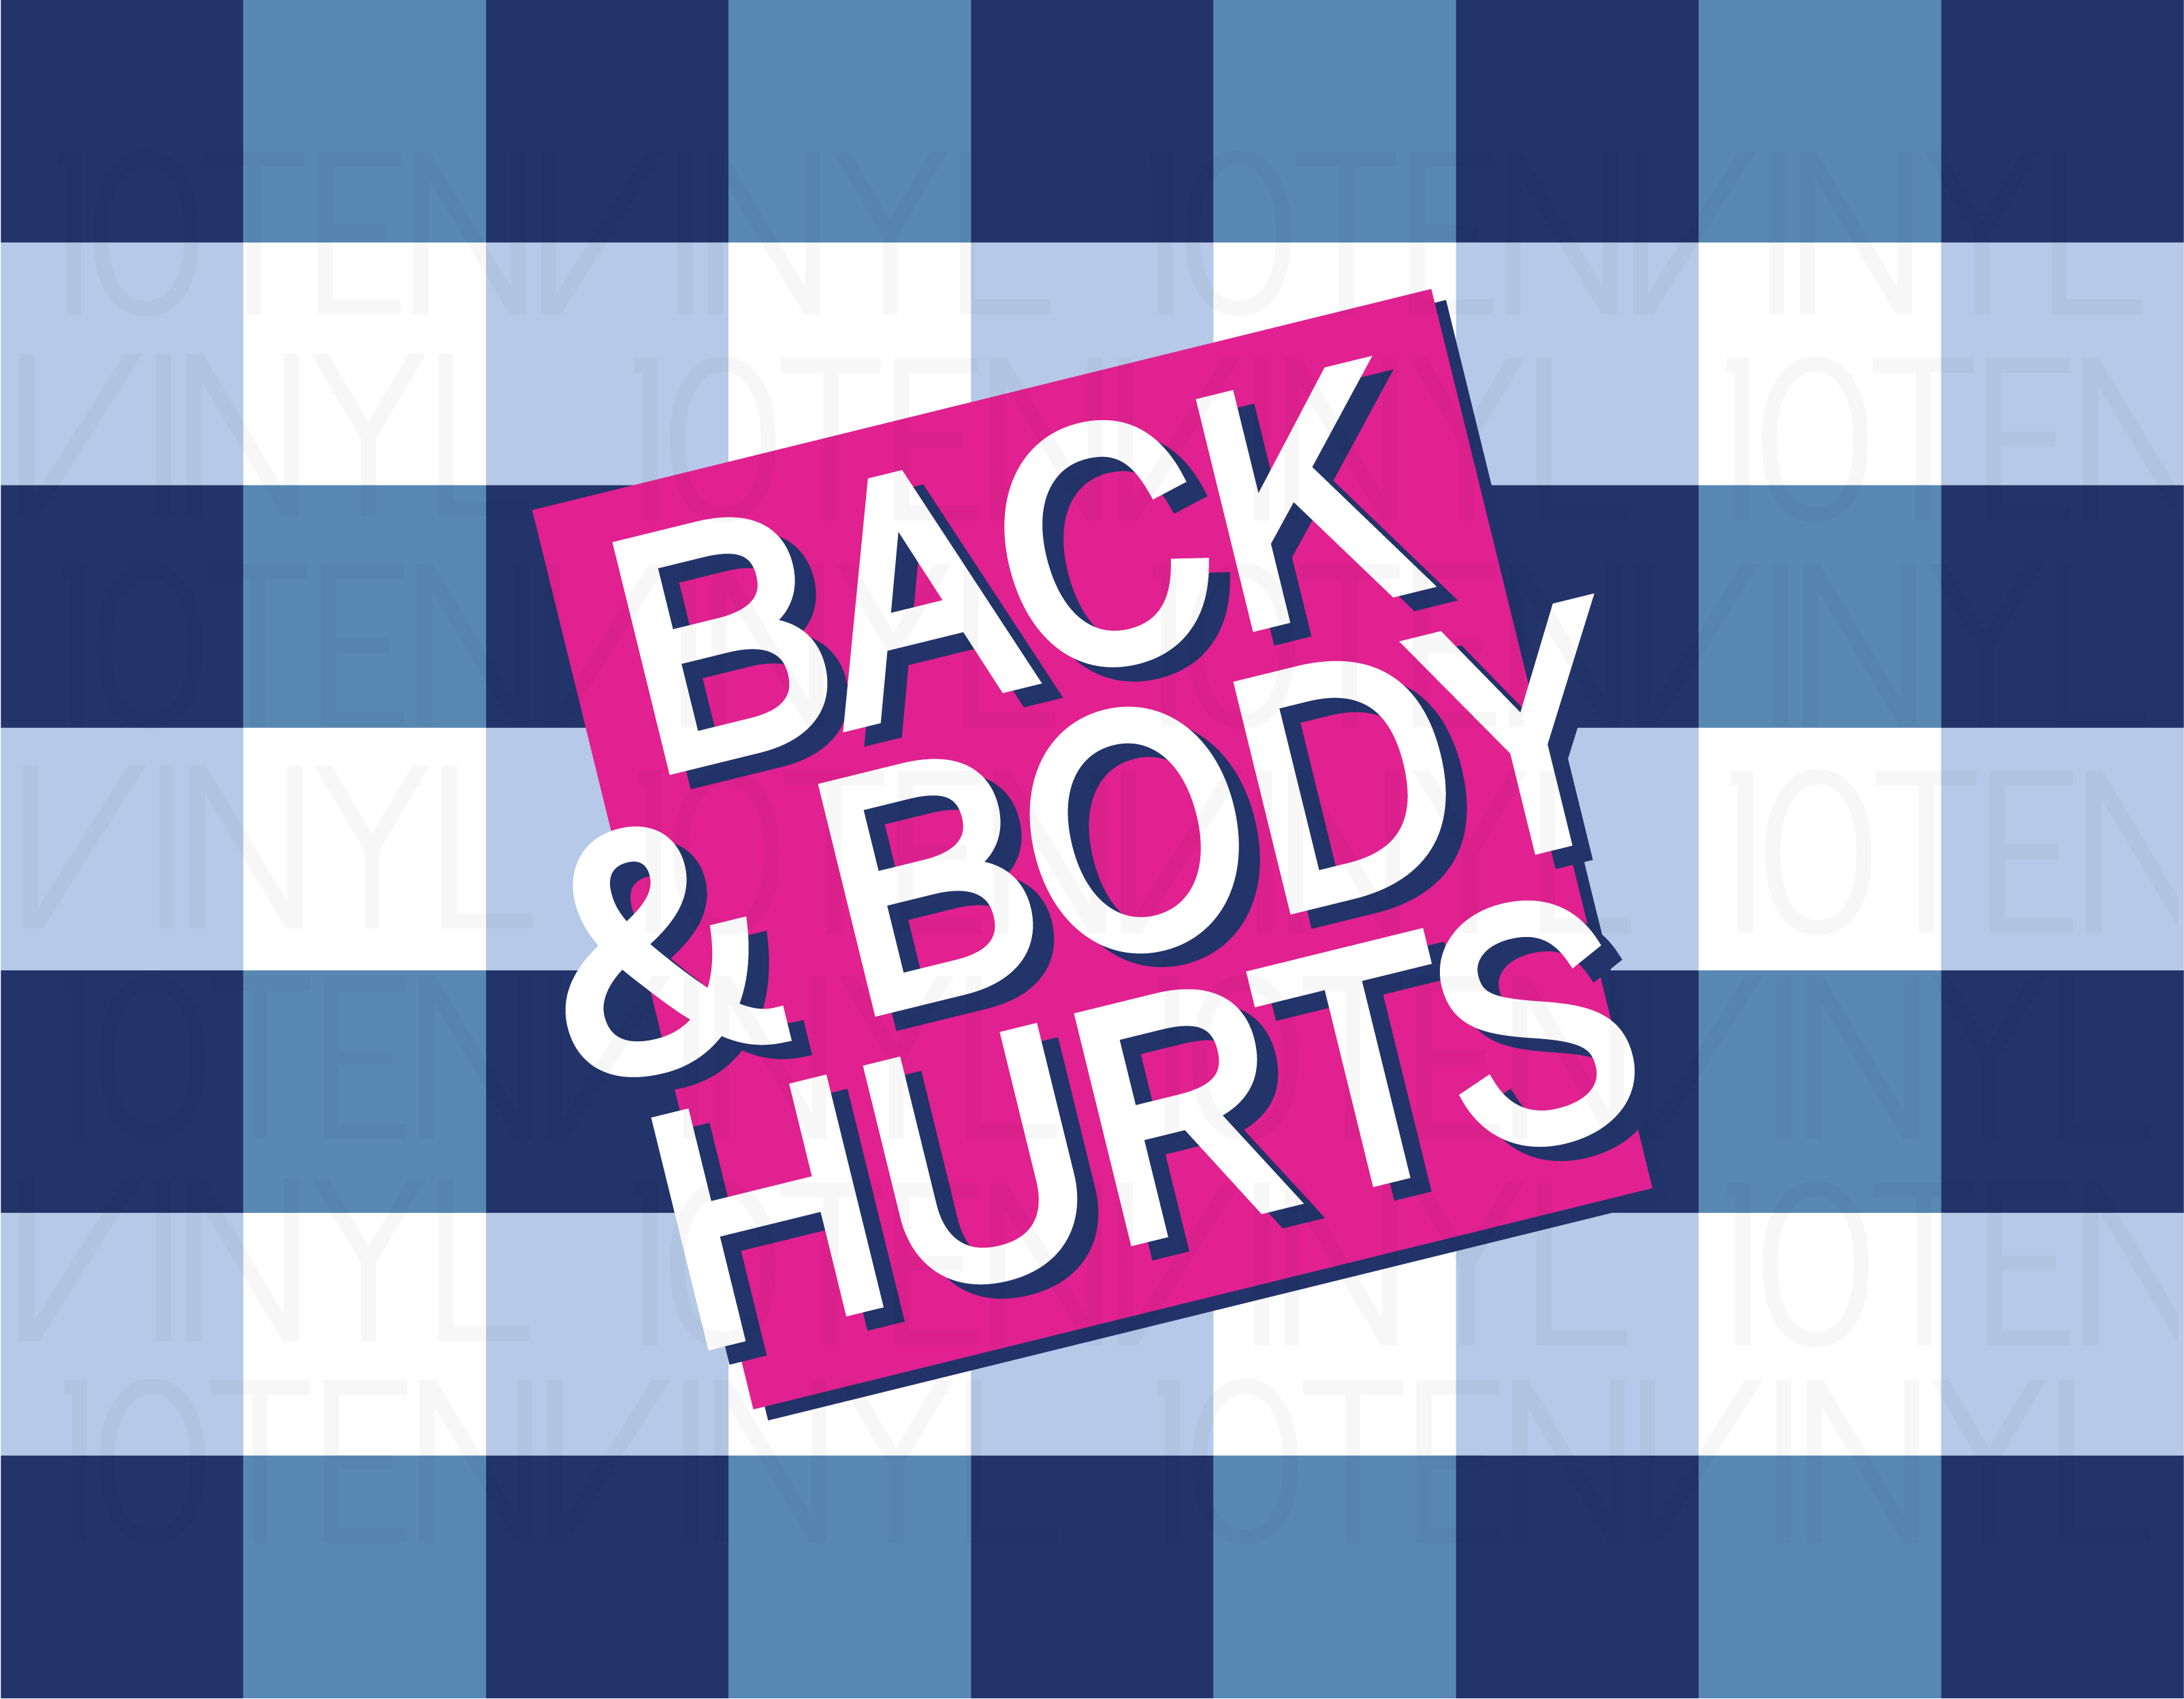 Design - Back & Body Hurts